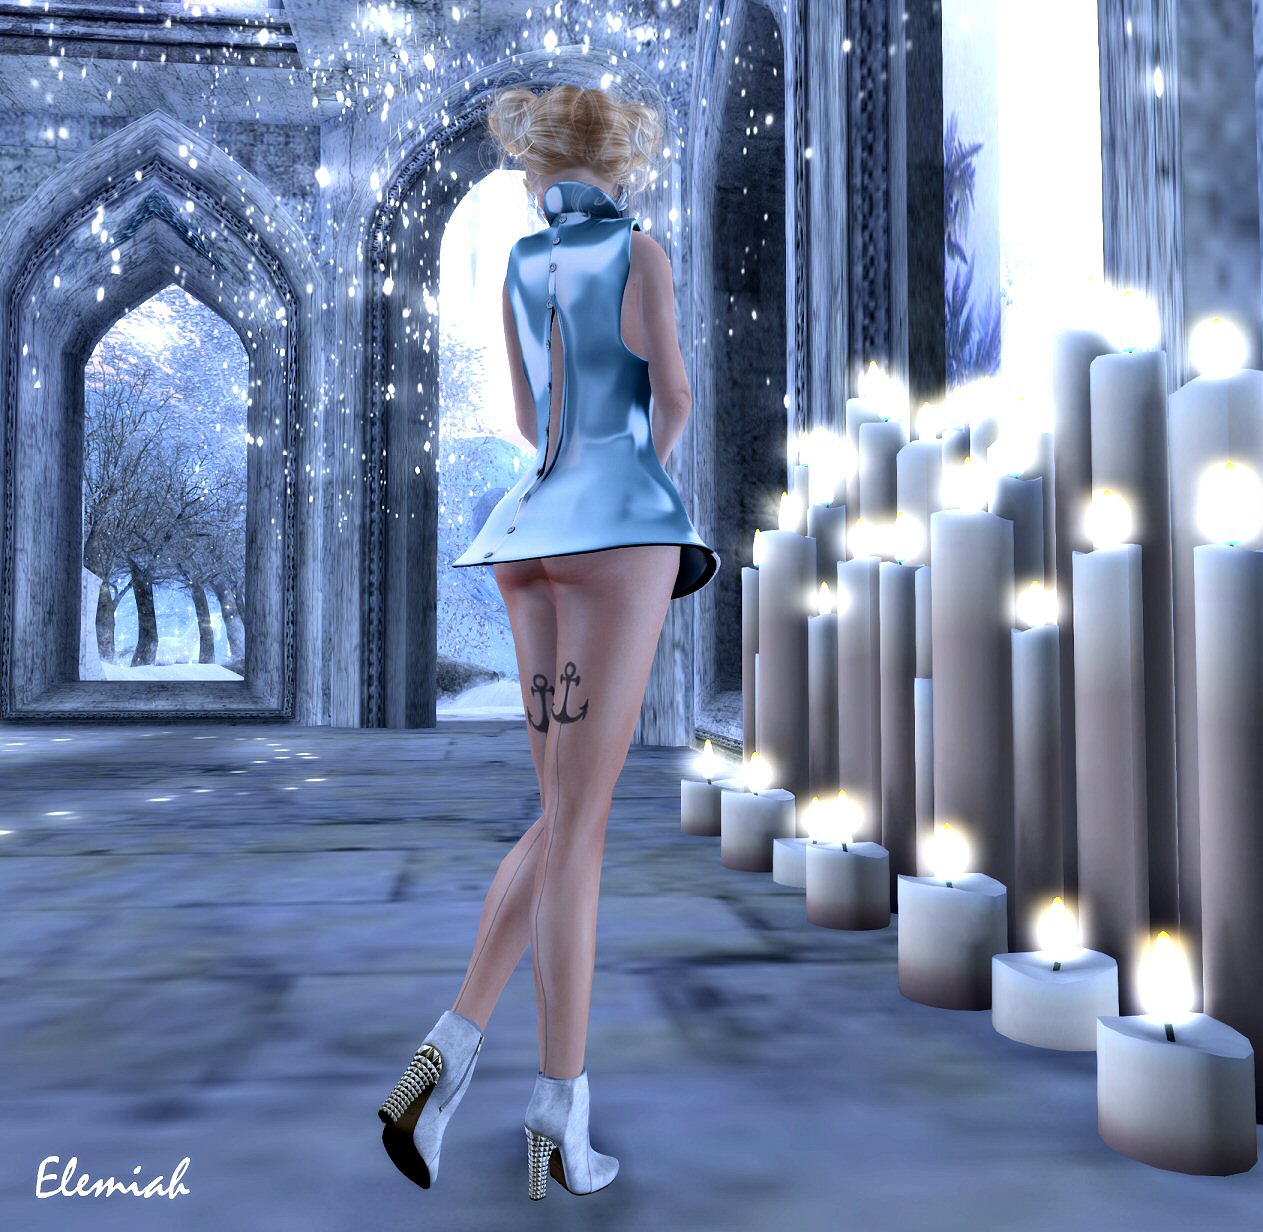 elemiah - blue angel 2B